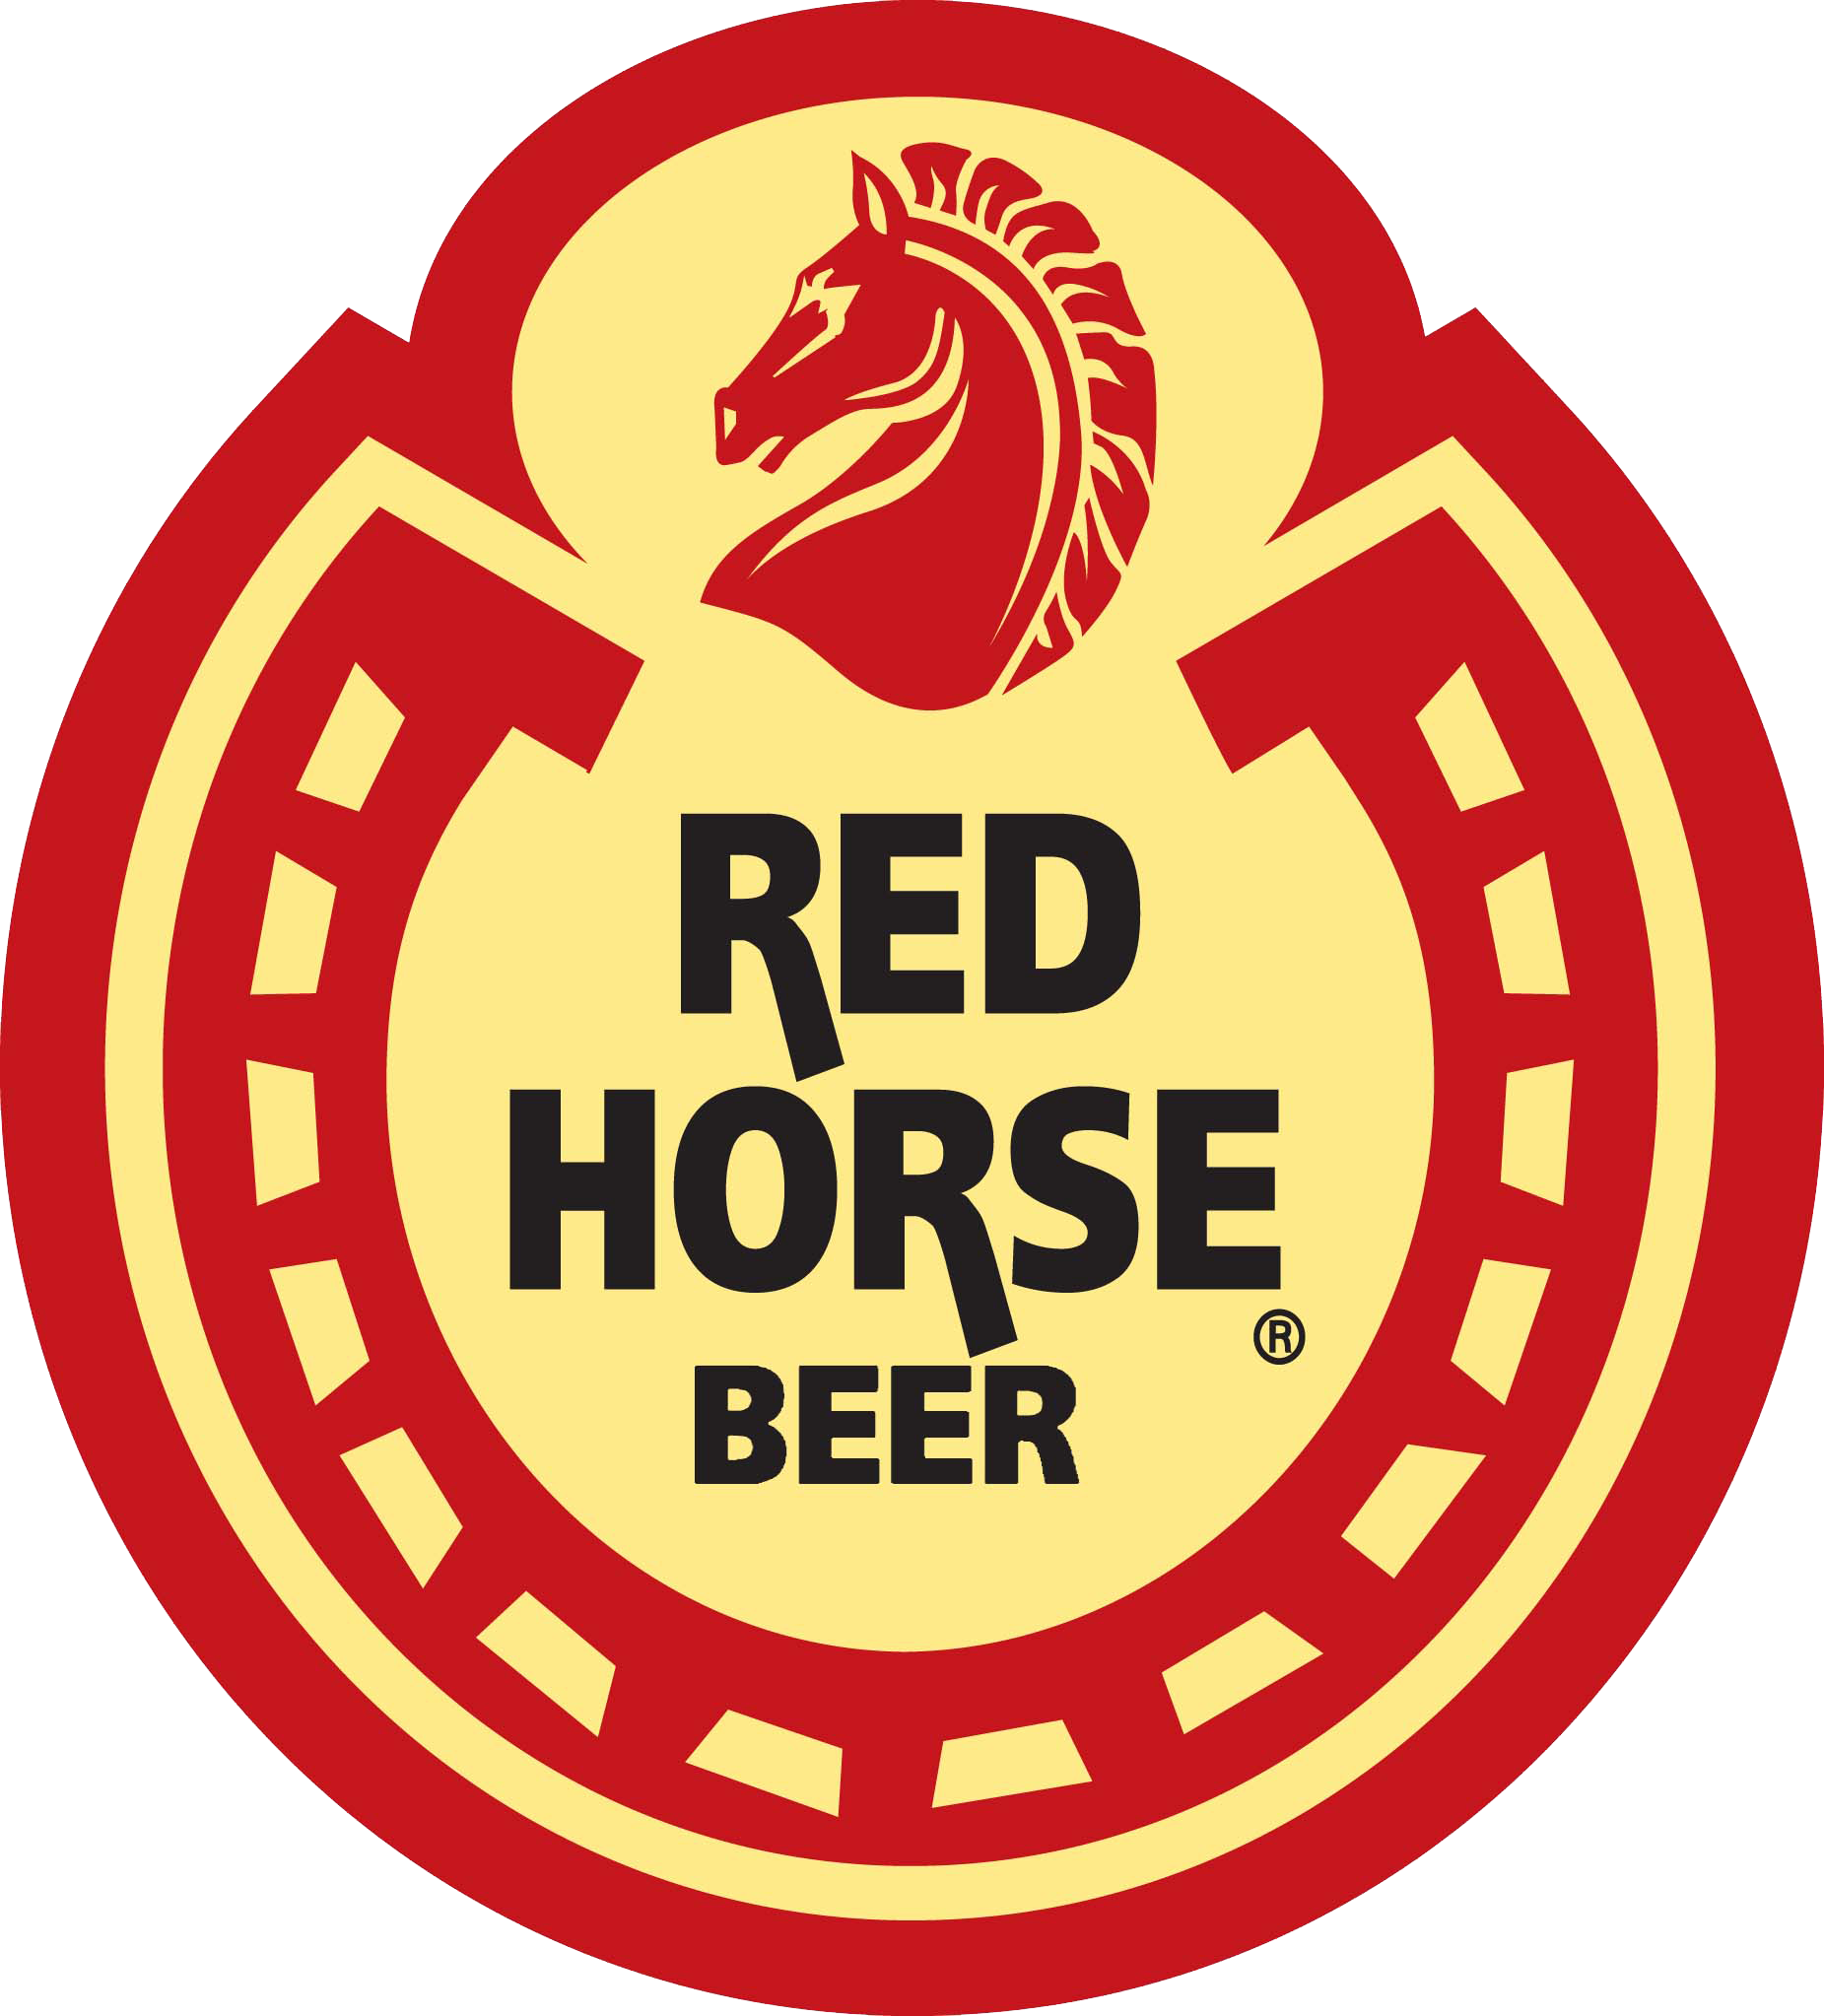 Beer redhorse